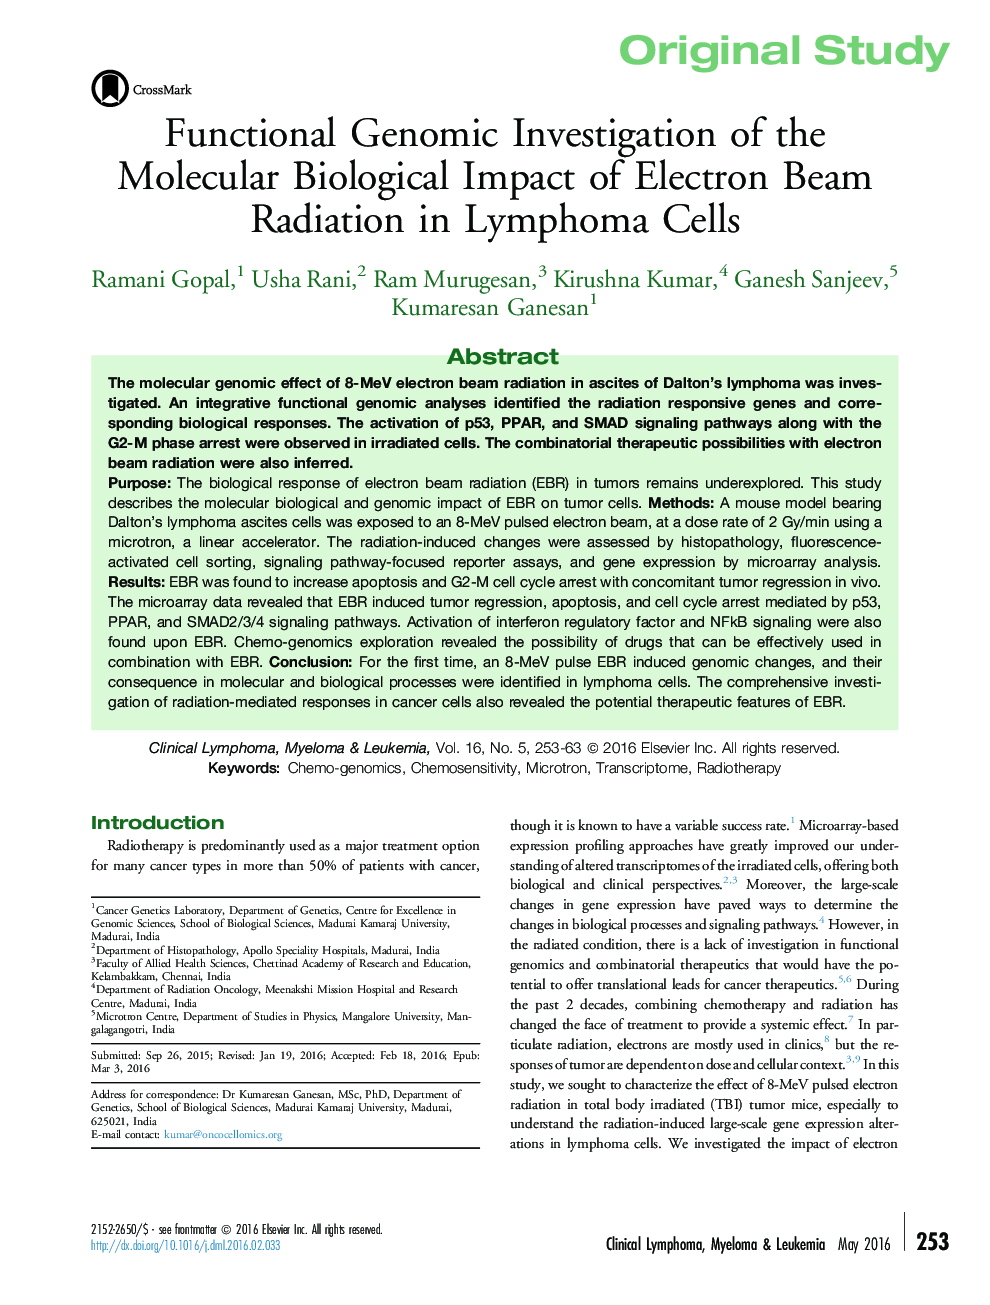 Original StudyFunctional Genomic Investigation of the Molecular Biological Impact of Electron Beam Radiation in Lymphoma Cells